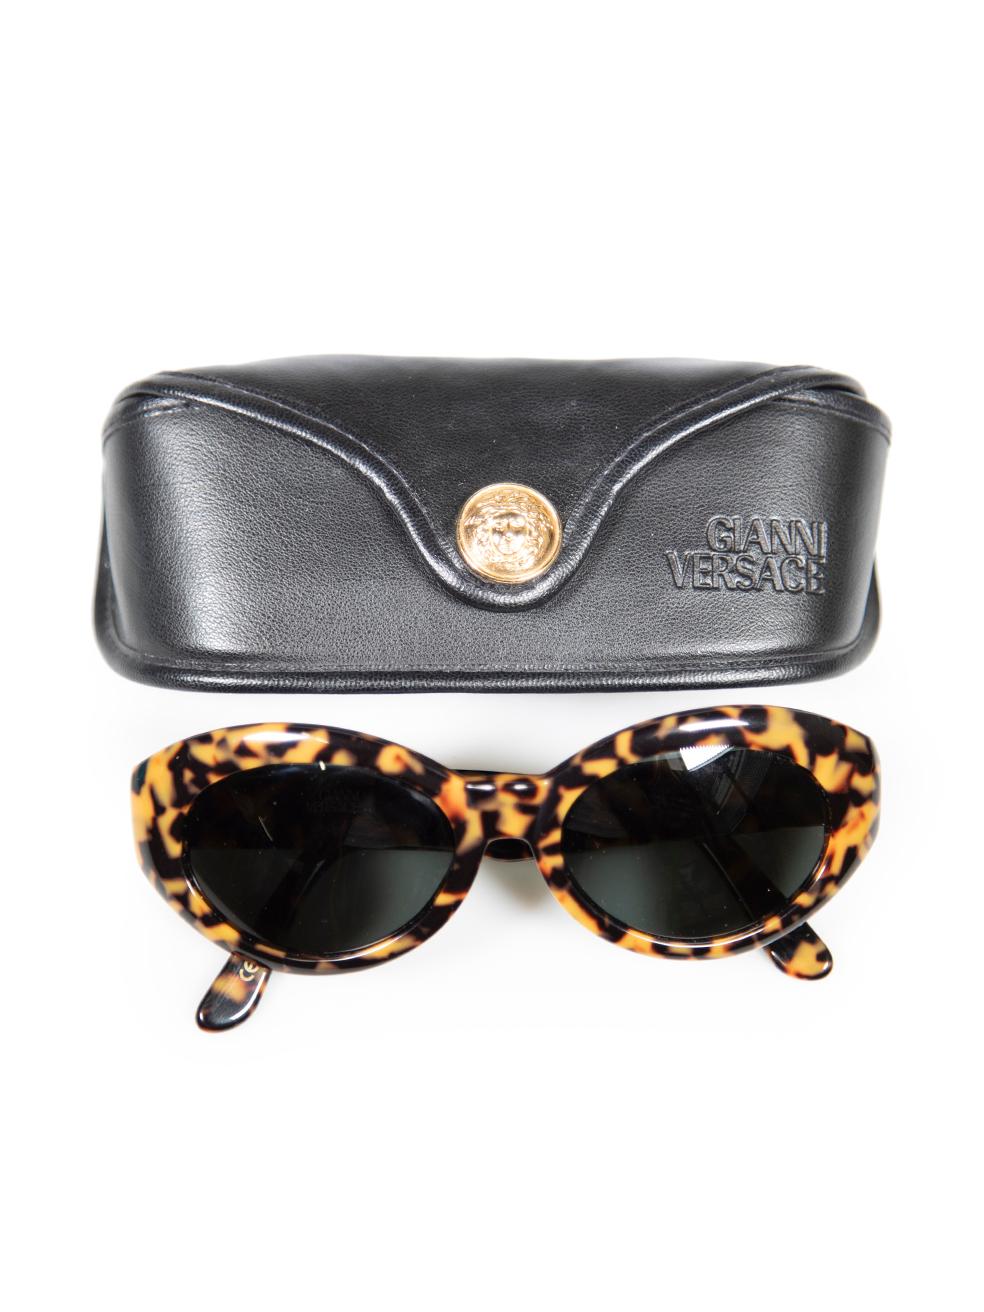 Versace Gianni Versace Brown Studded Medusa Sunglasses 1